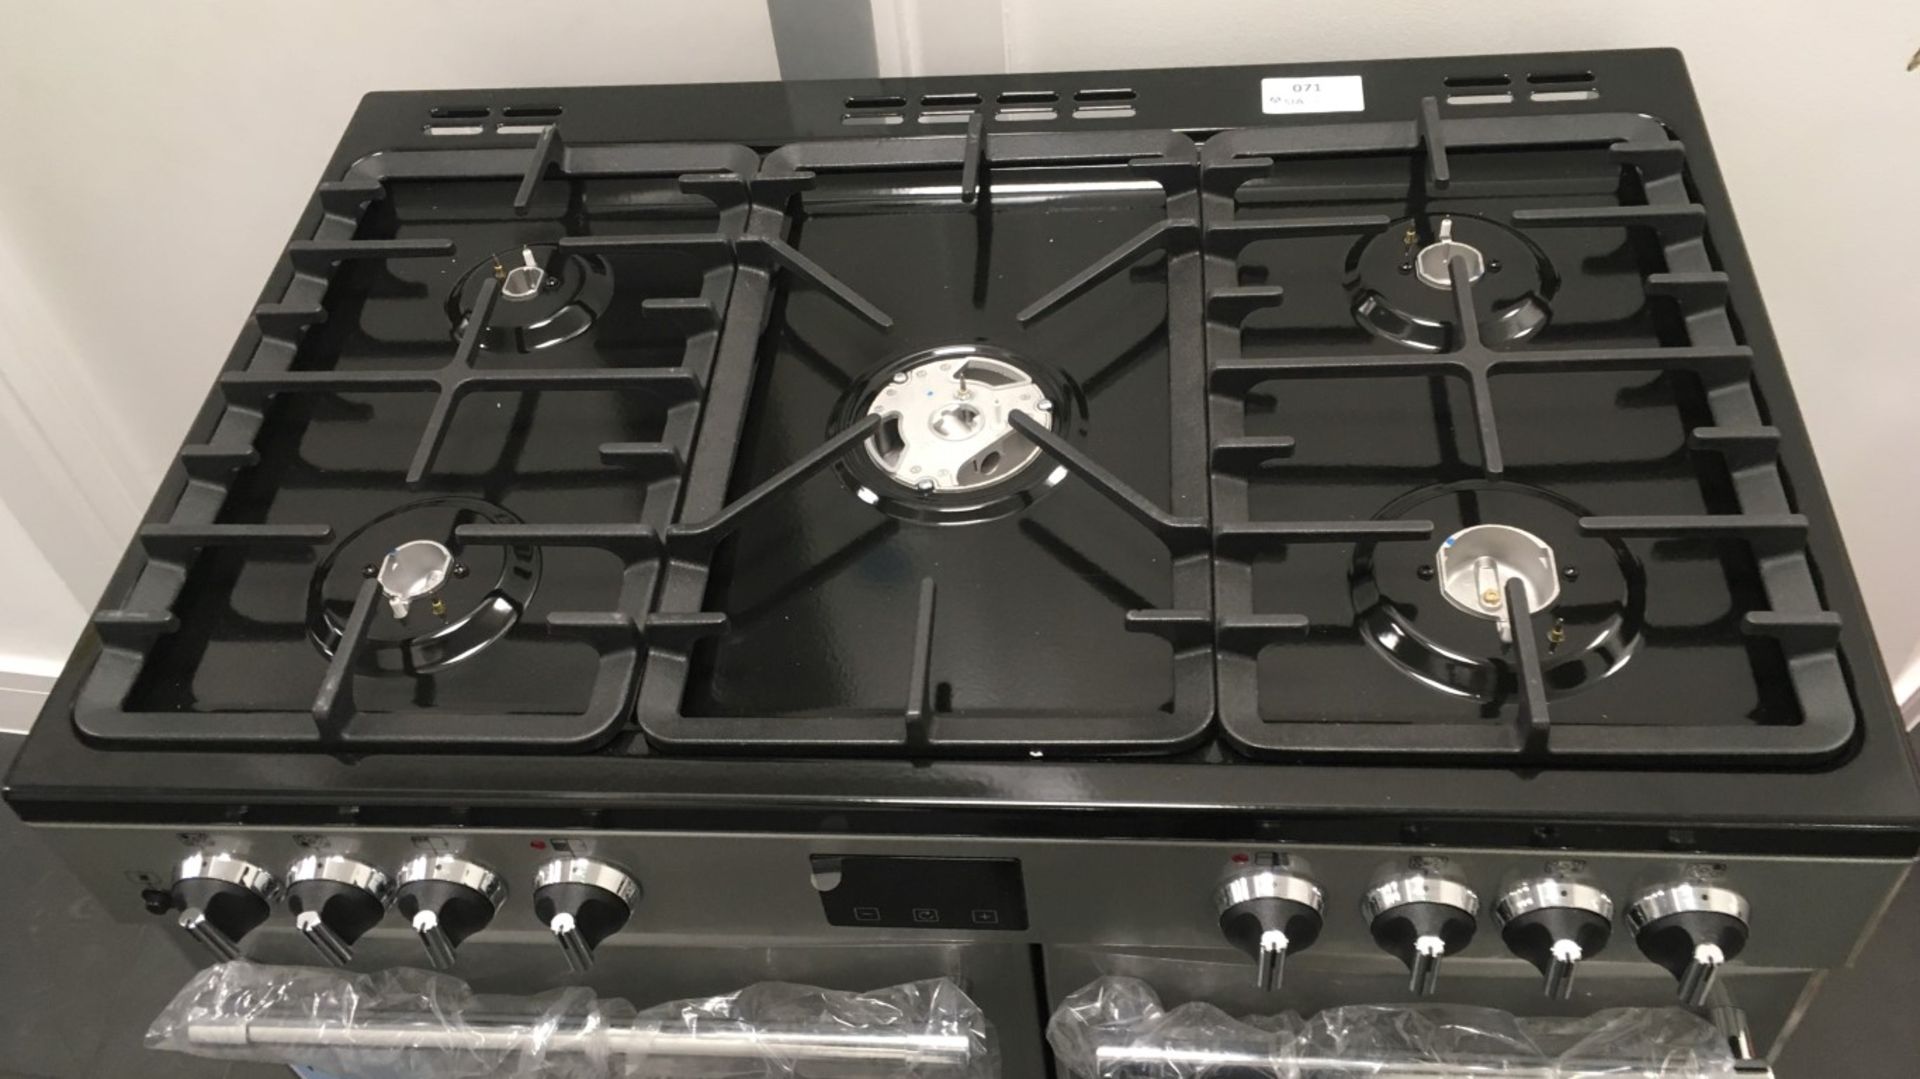 Belling stainless steel six burner range cooker - Image 2 of 5